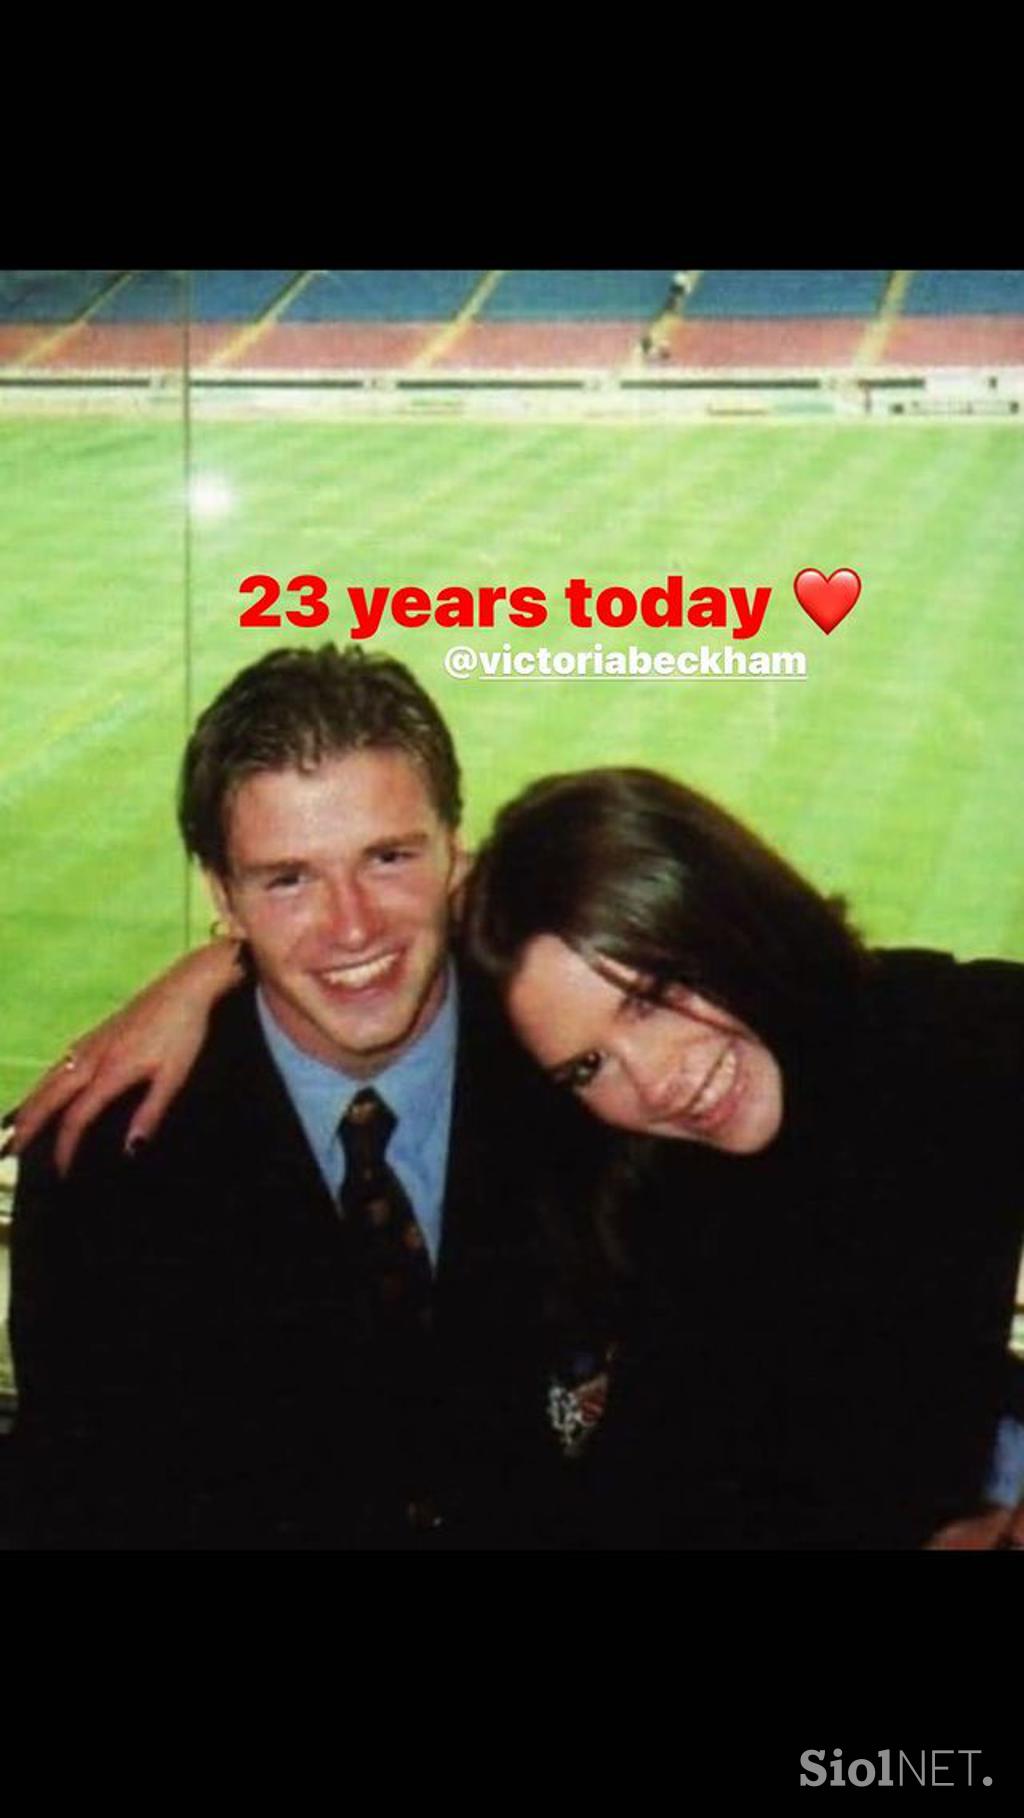 David in Victoria Beckham obletnica